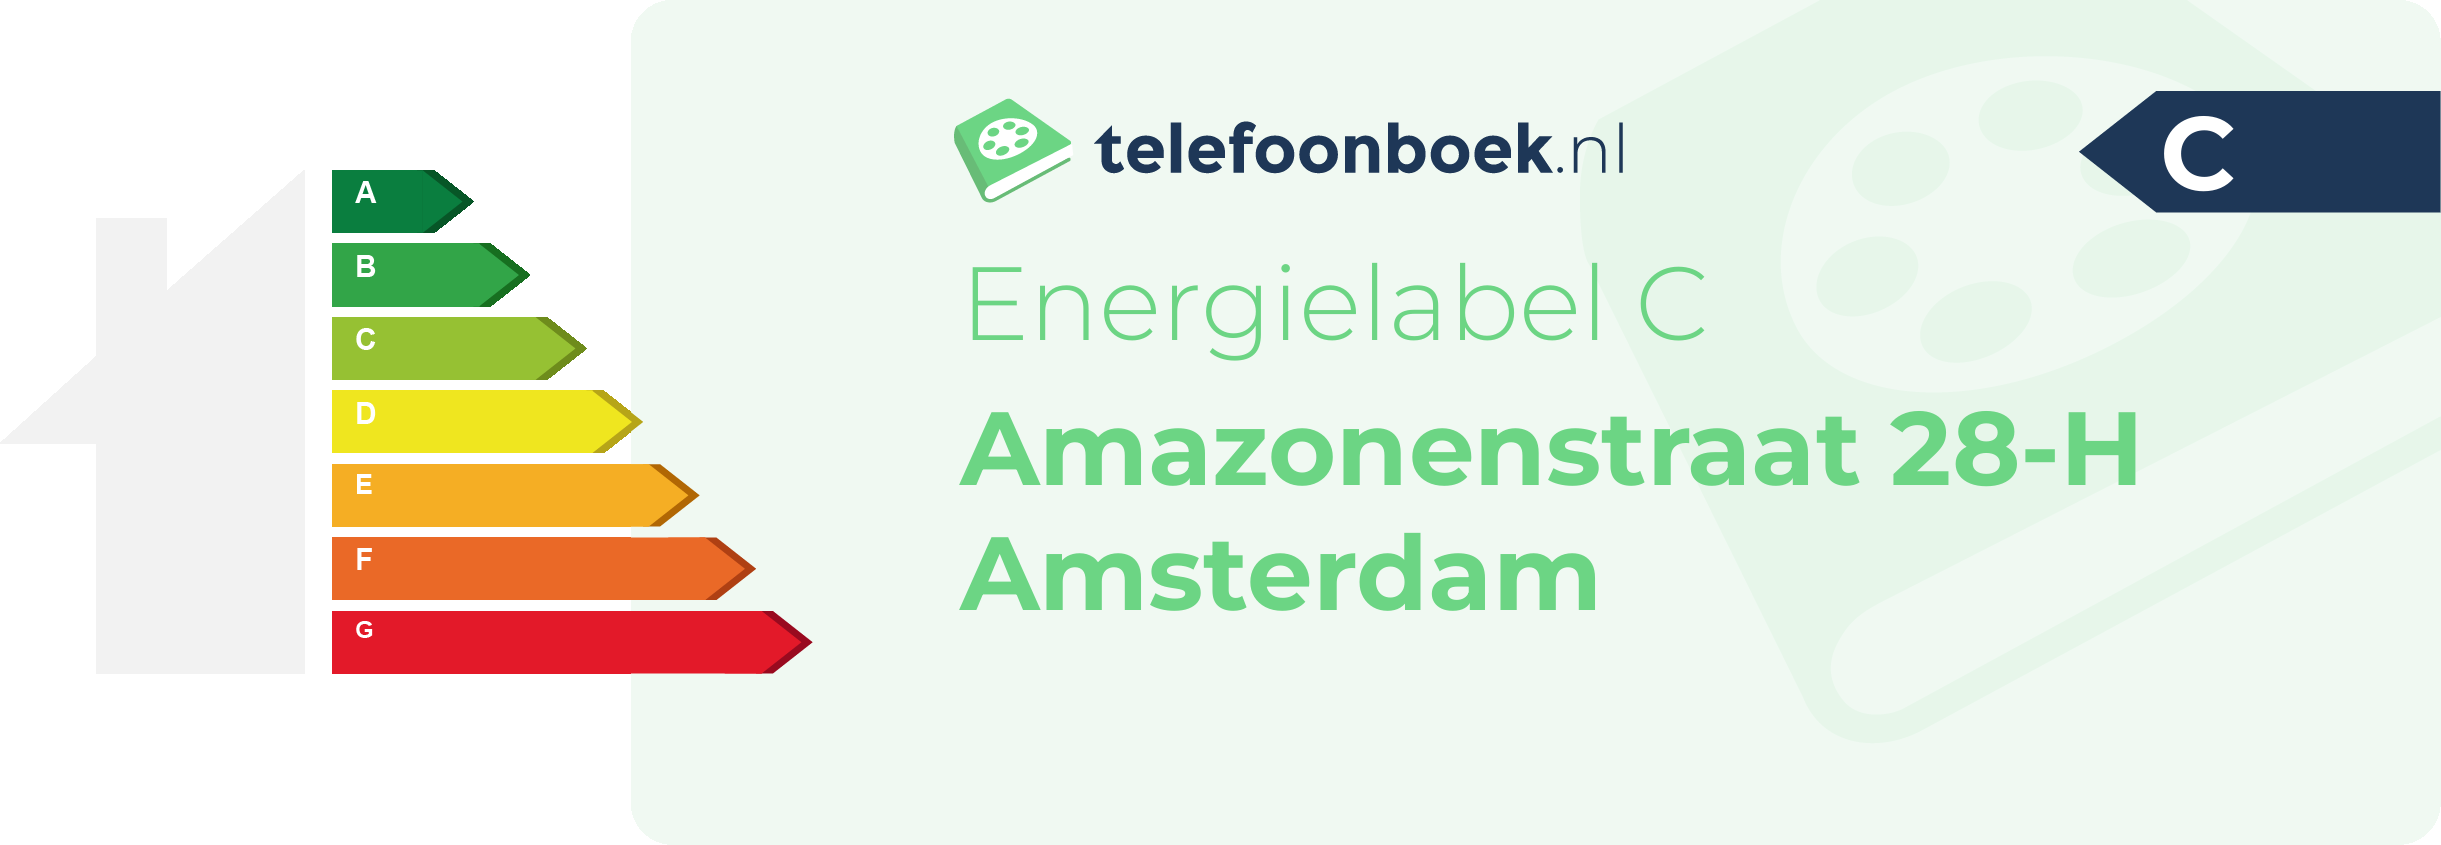 Energielabel Amazonenstraat 28-H Amsterdam